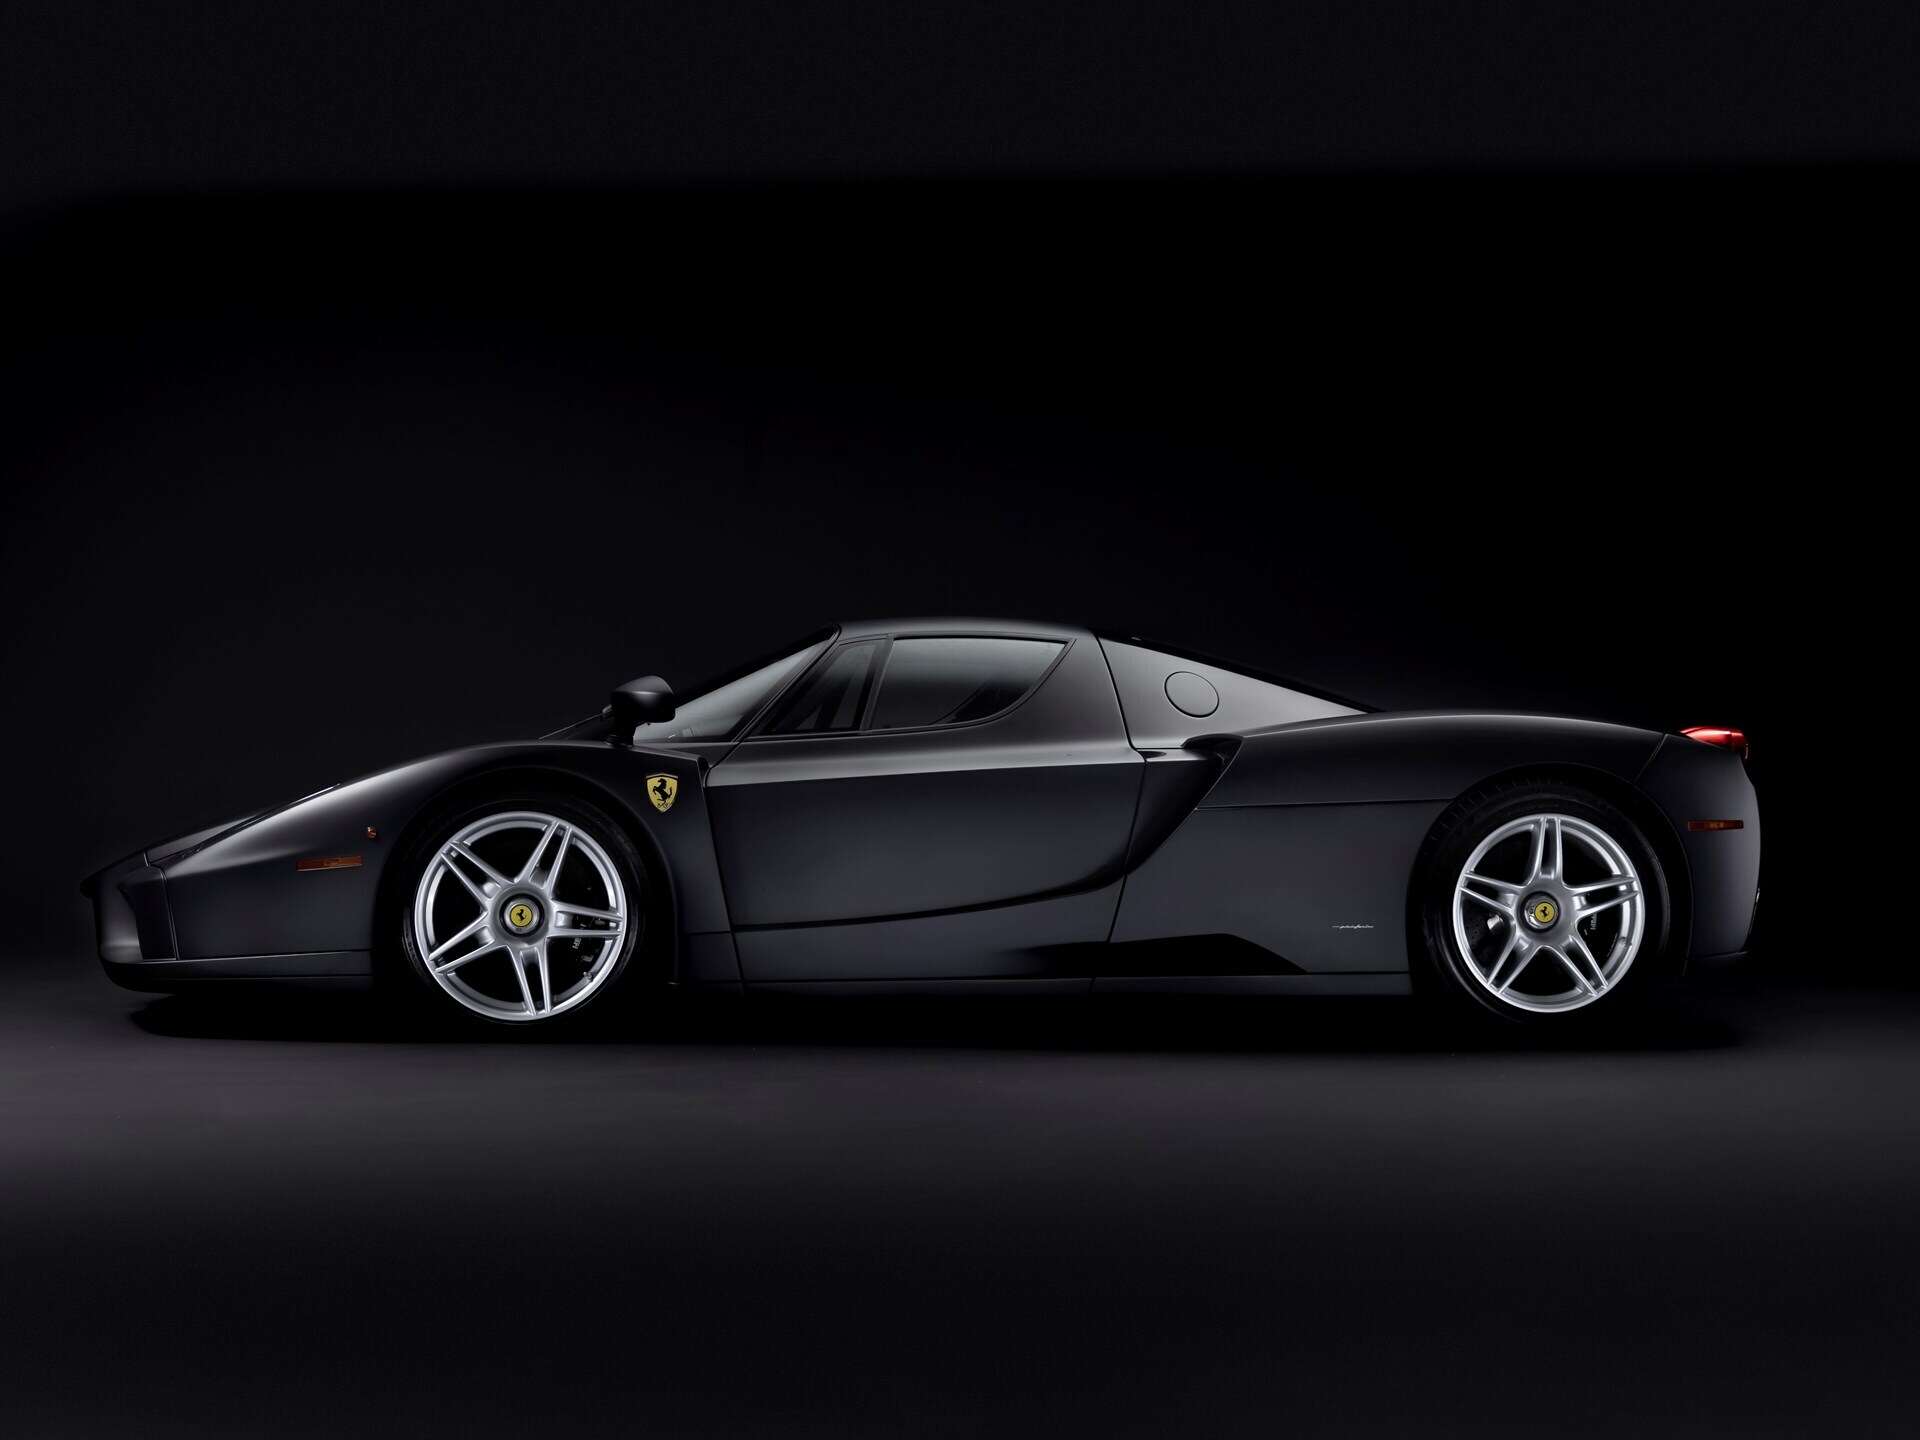 imagen 10 de Sale a subasta un Ferrari Enzo negro mate único excepcional.